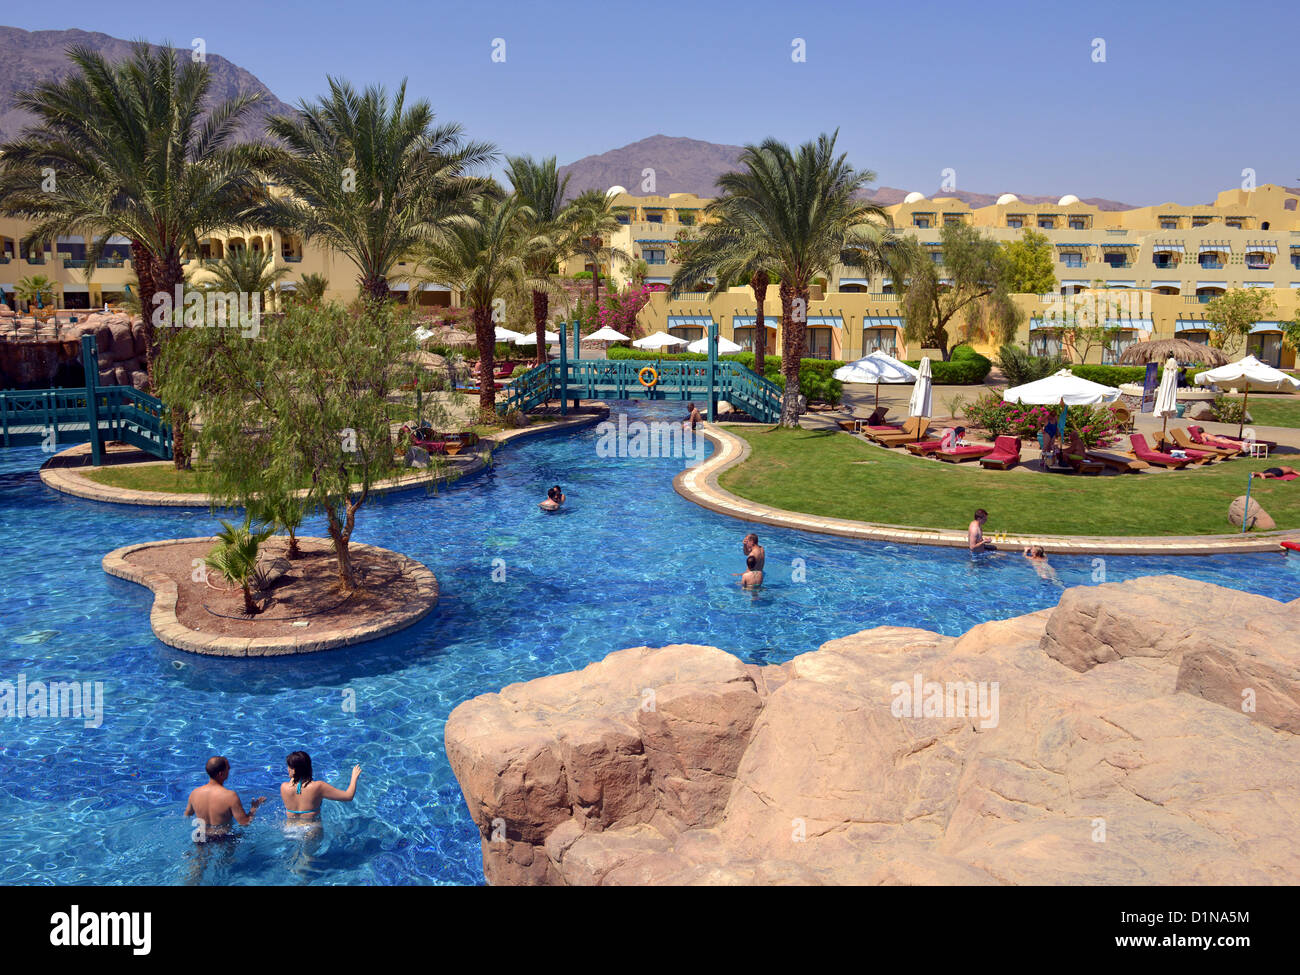 Das Marriott Hotel Pool und Gärten, Taba Heights Holiday Resort-Komplex am Sinai in Ägypten. Stockfoto